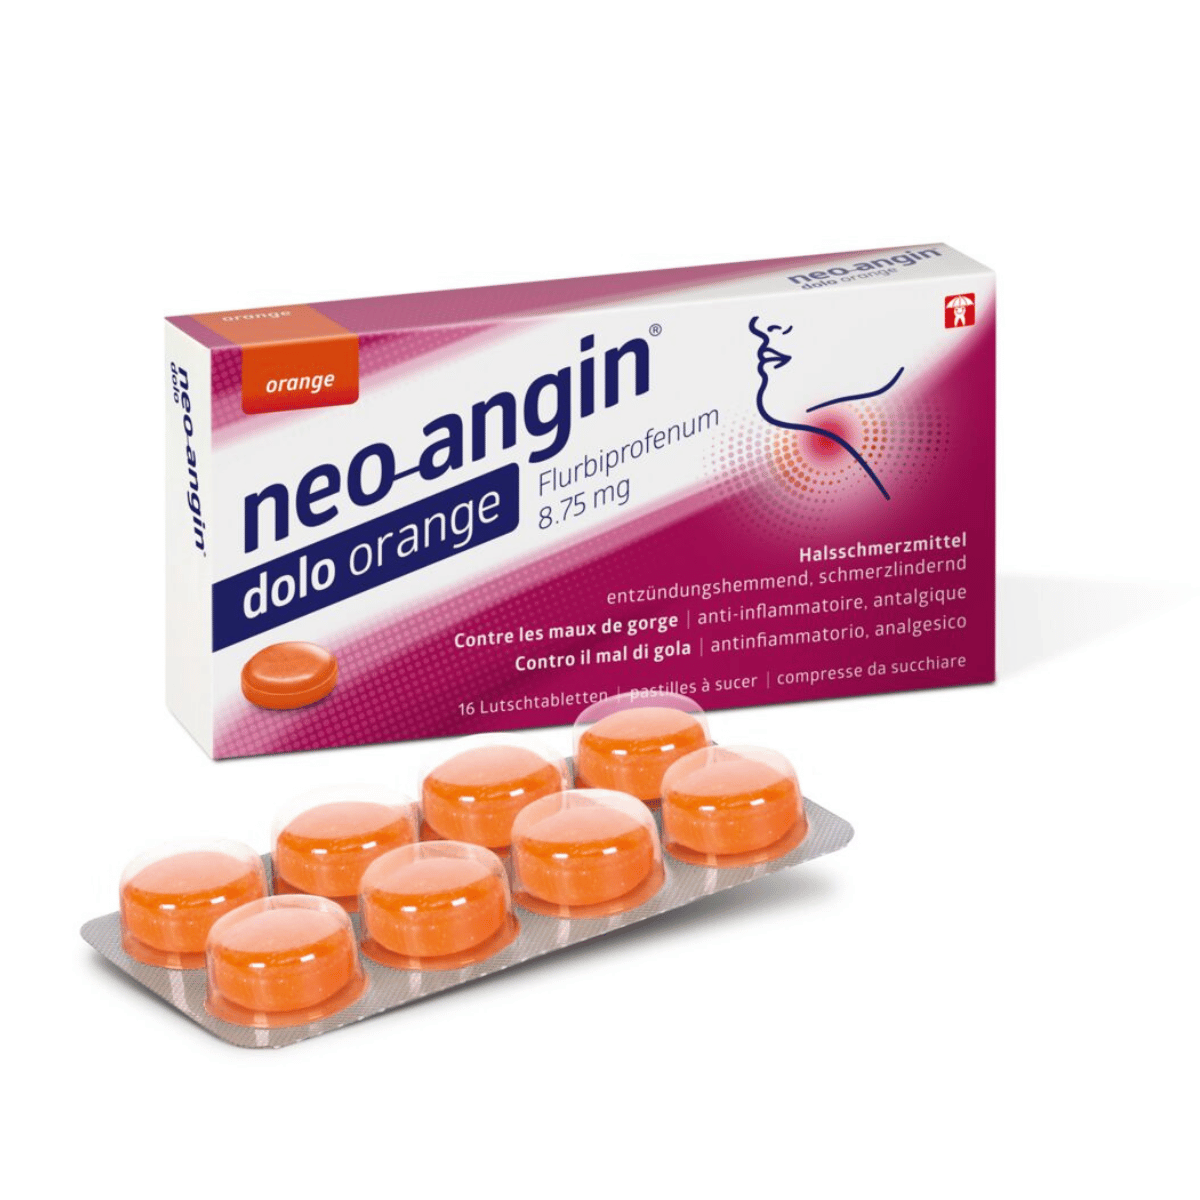 Neo-Angin dolo Lutschtabletten 8.75 mg Orange 16 Stück